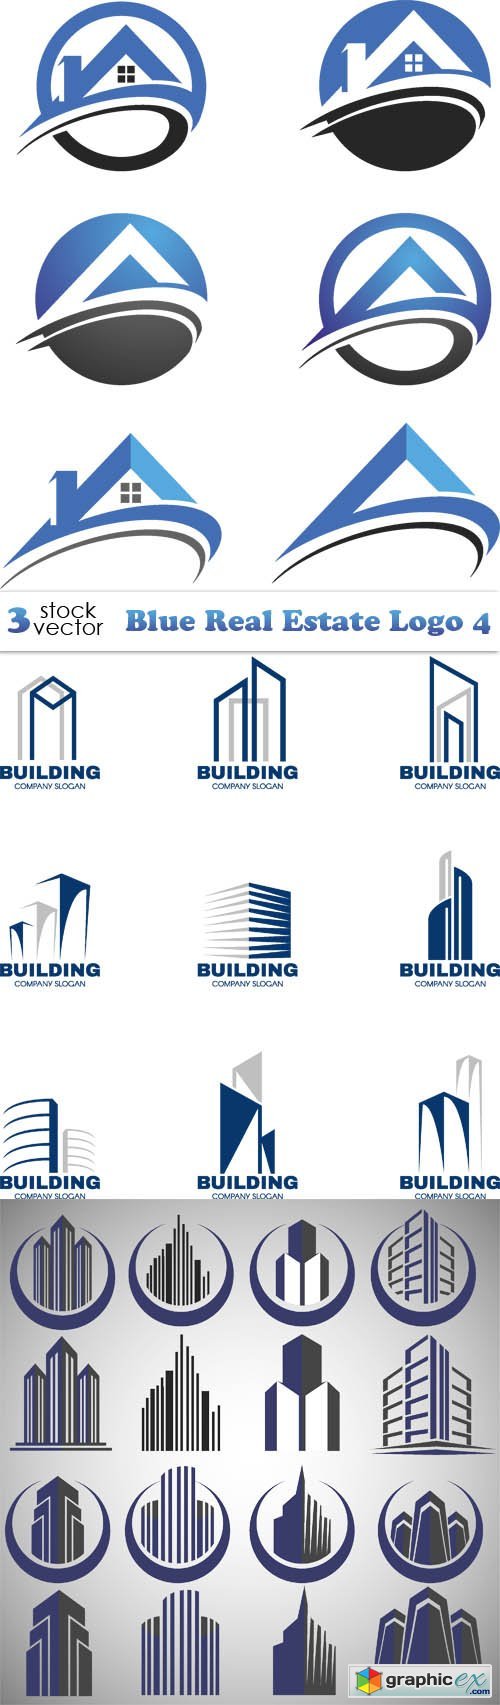 Blue Real Estate Logo 4